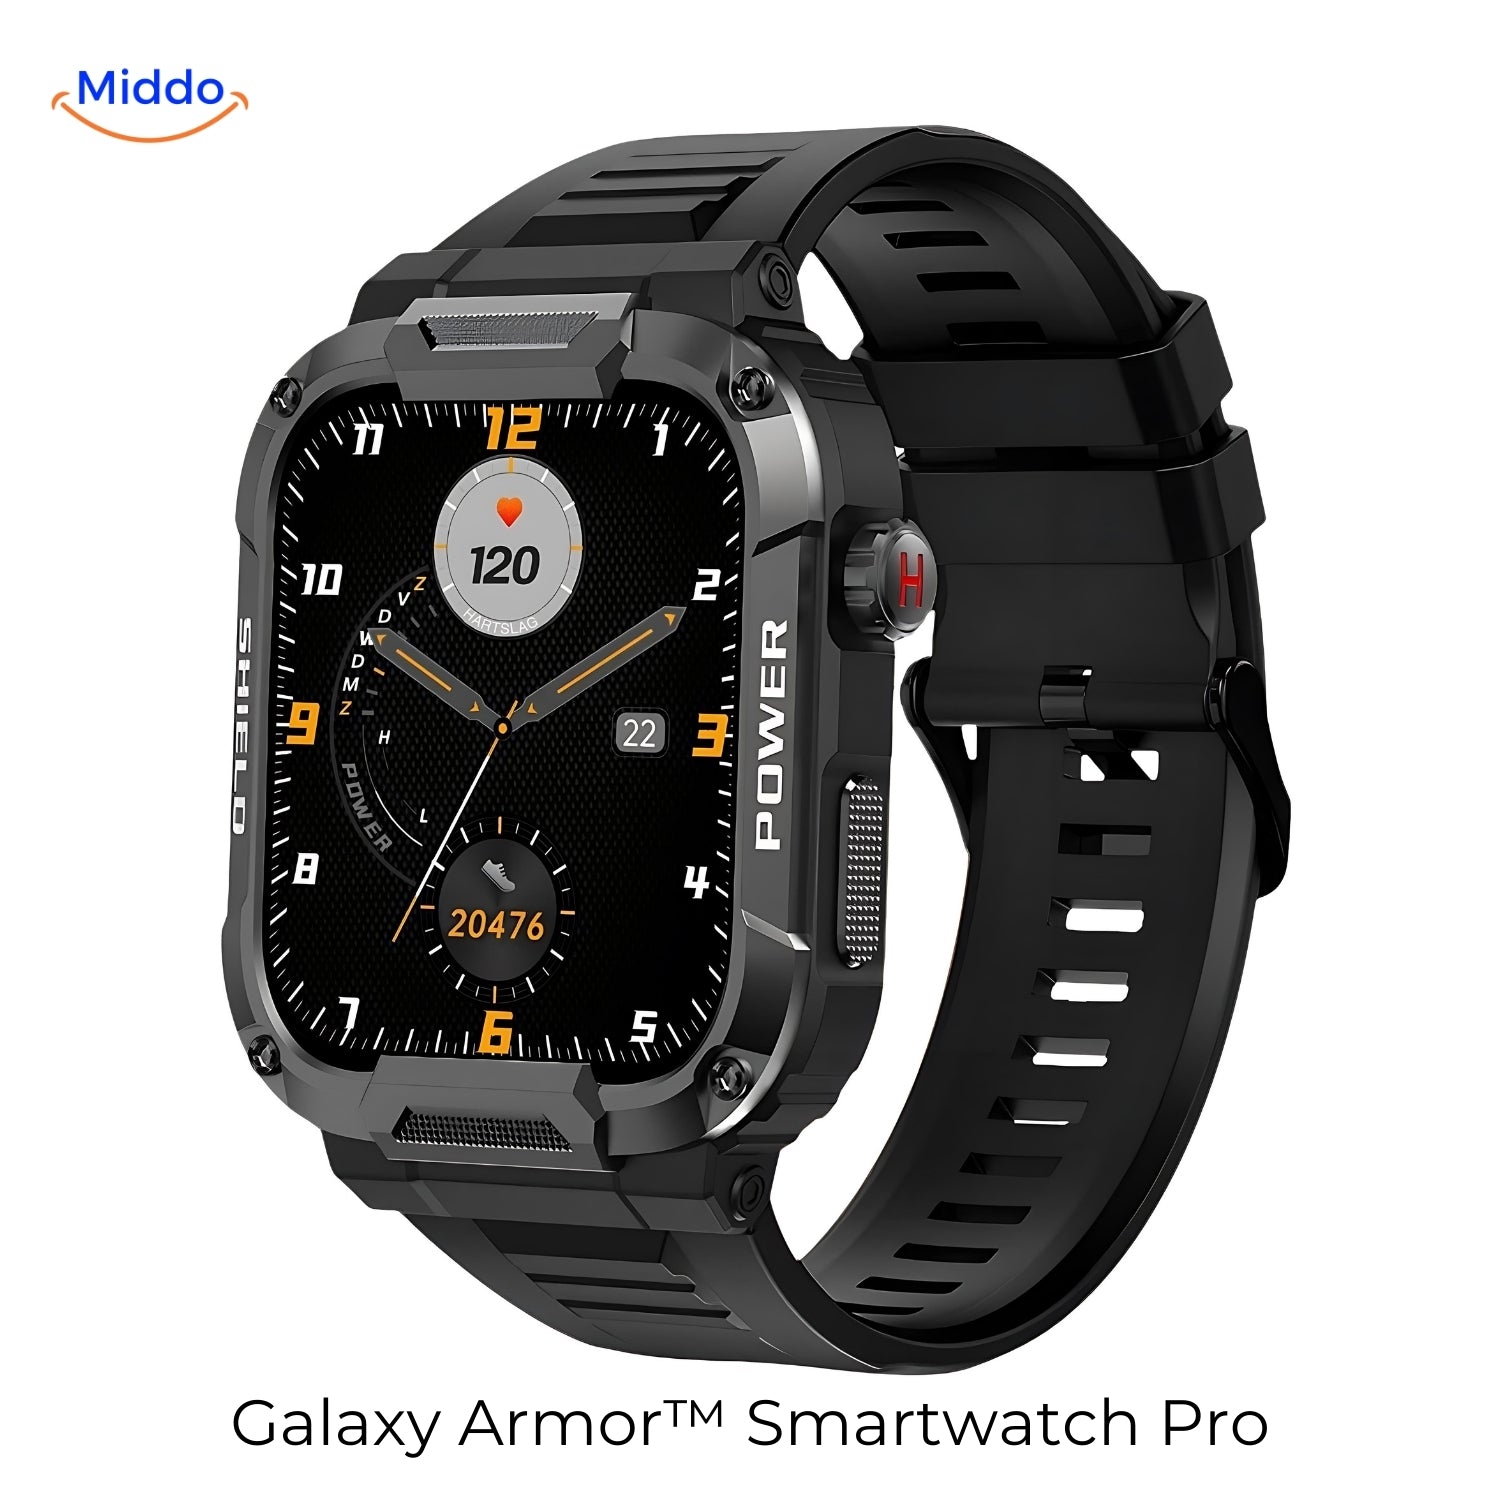 Galaxy Armor Smartwatch Pro voor IOS en Android zwart www.middo.nl